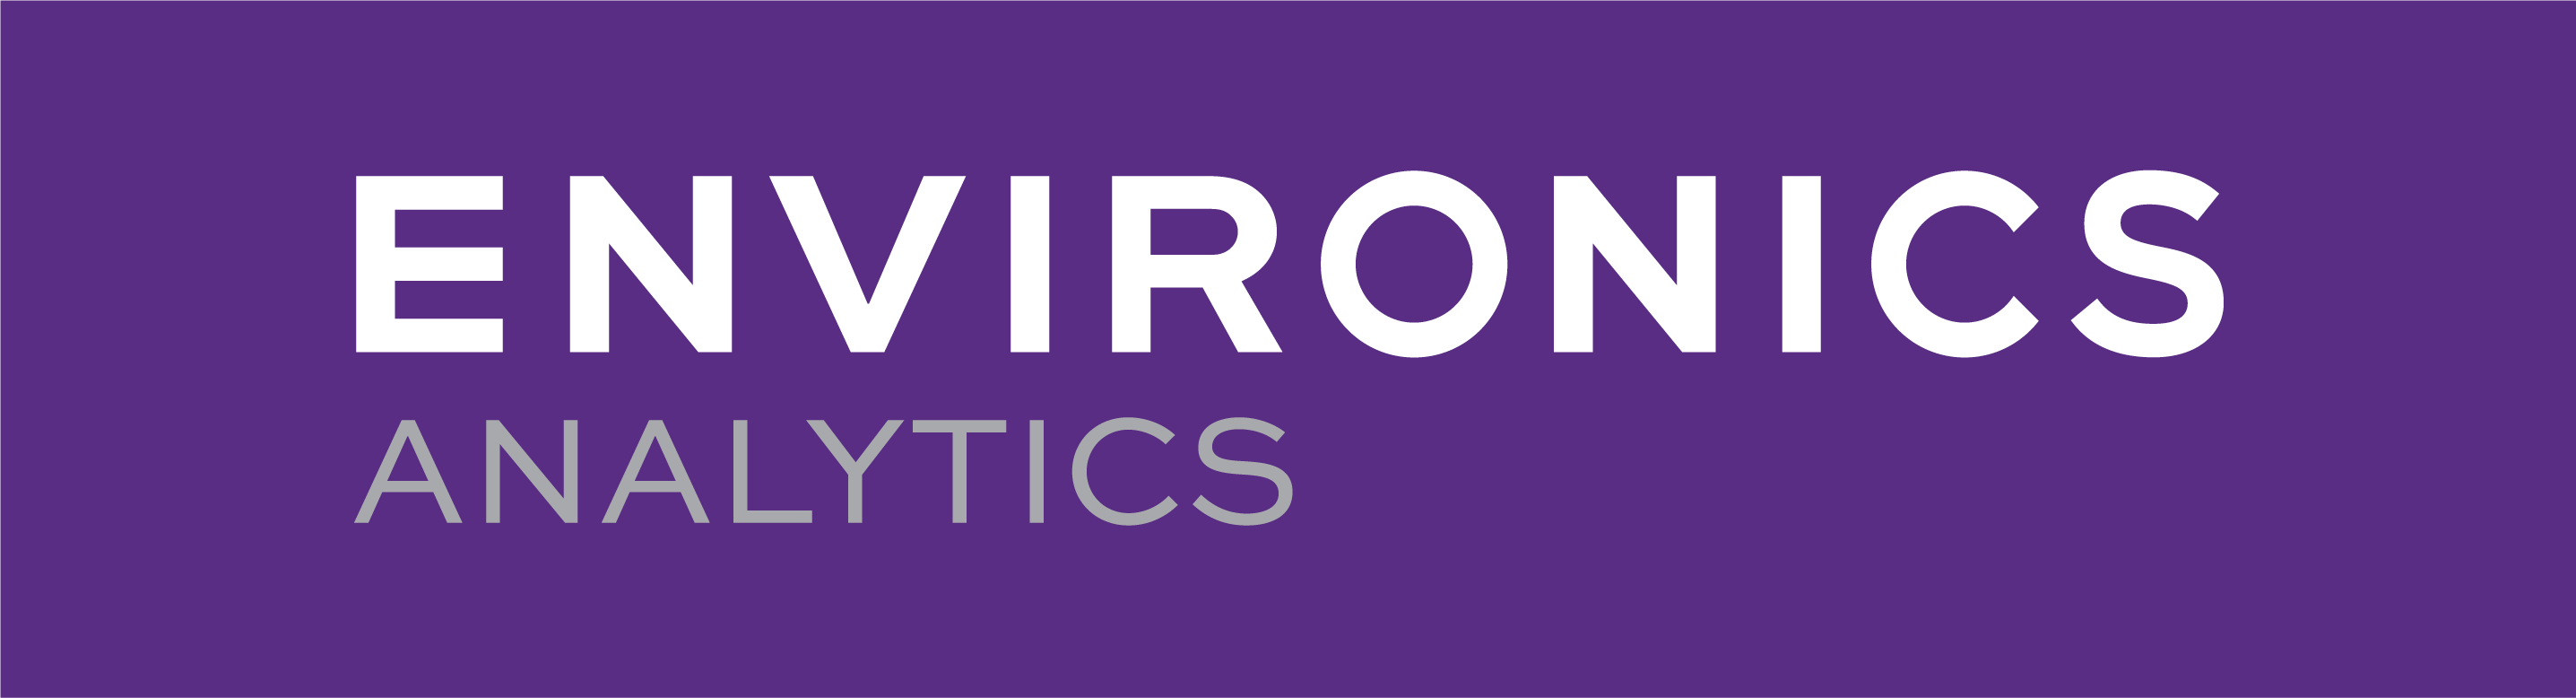 Environics Analytics logo